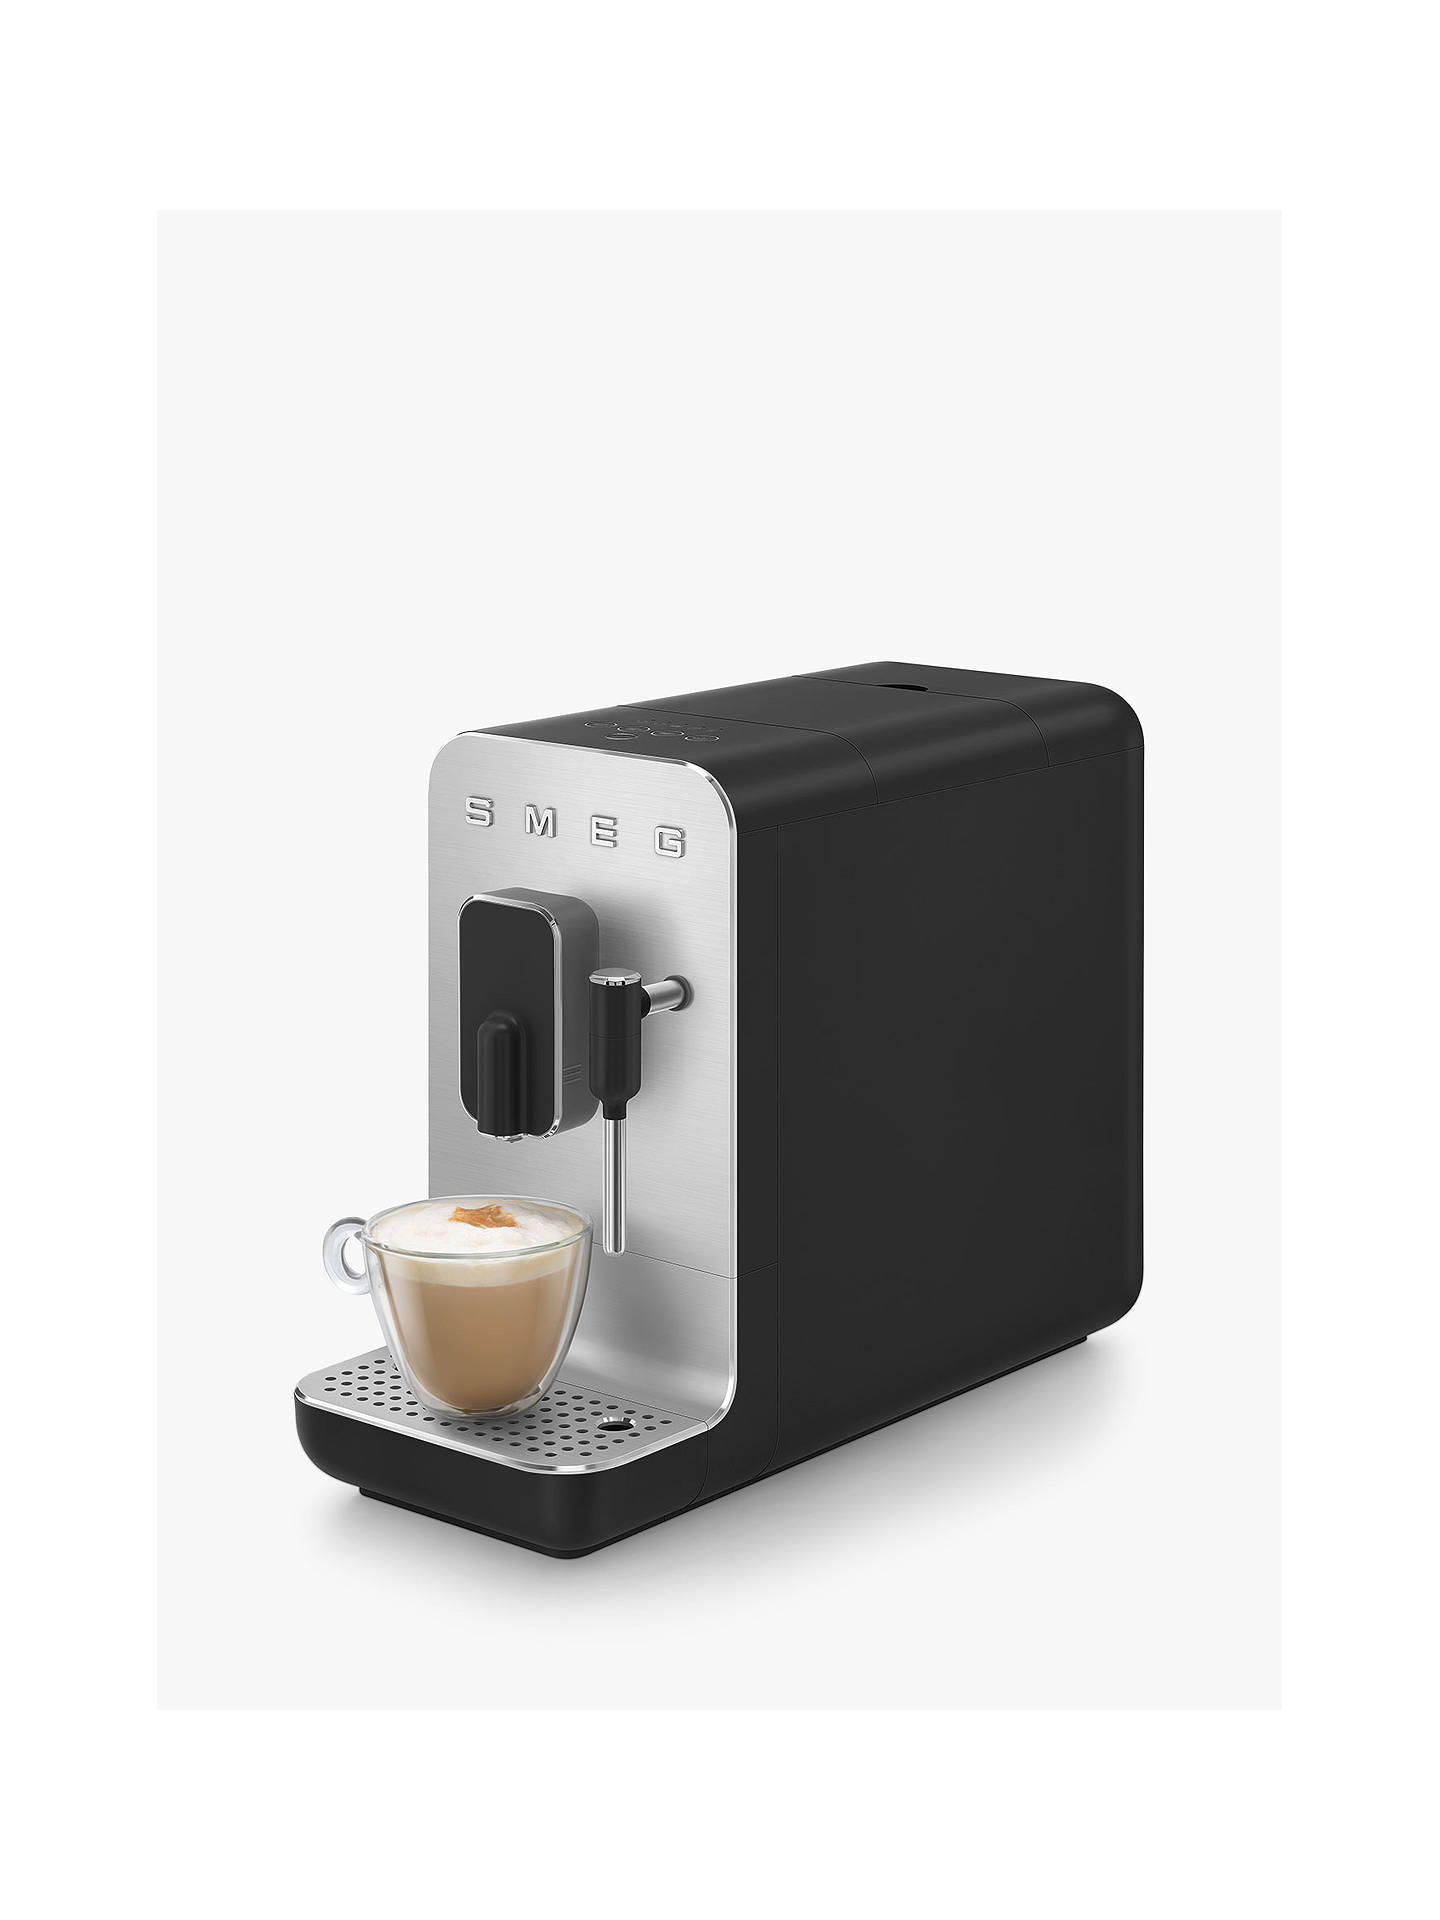 Smeg BCC02 Bean To Cup Coffee Machine